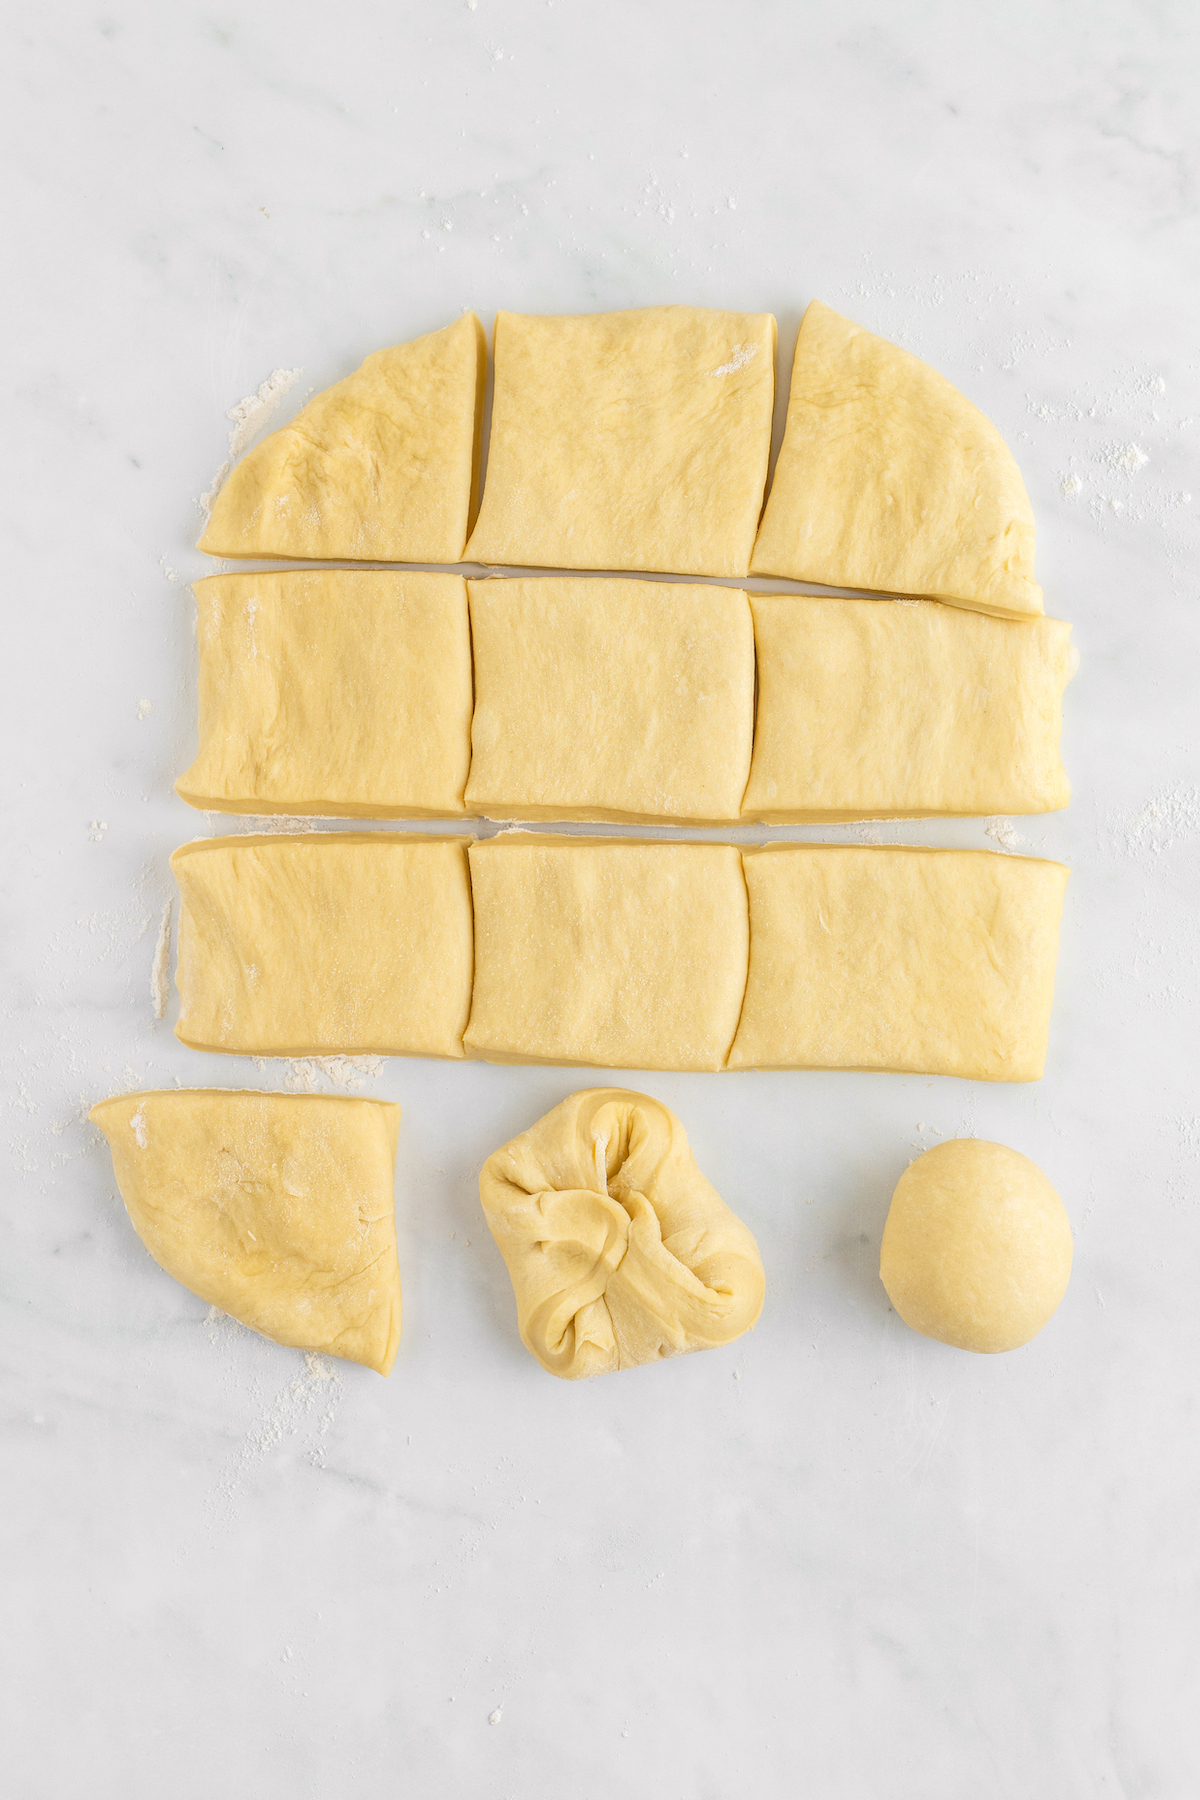 Folding squares of dough into rolls.